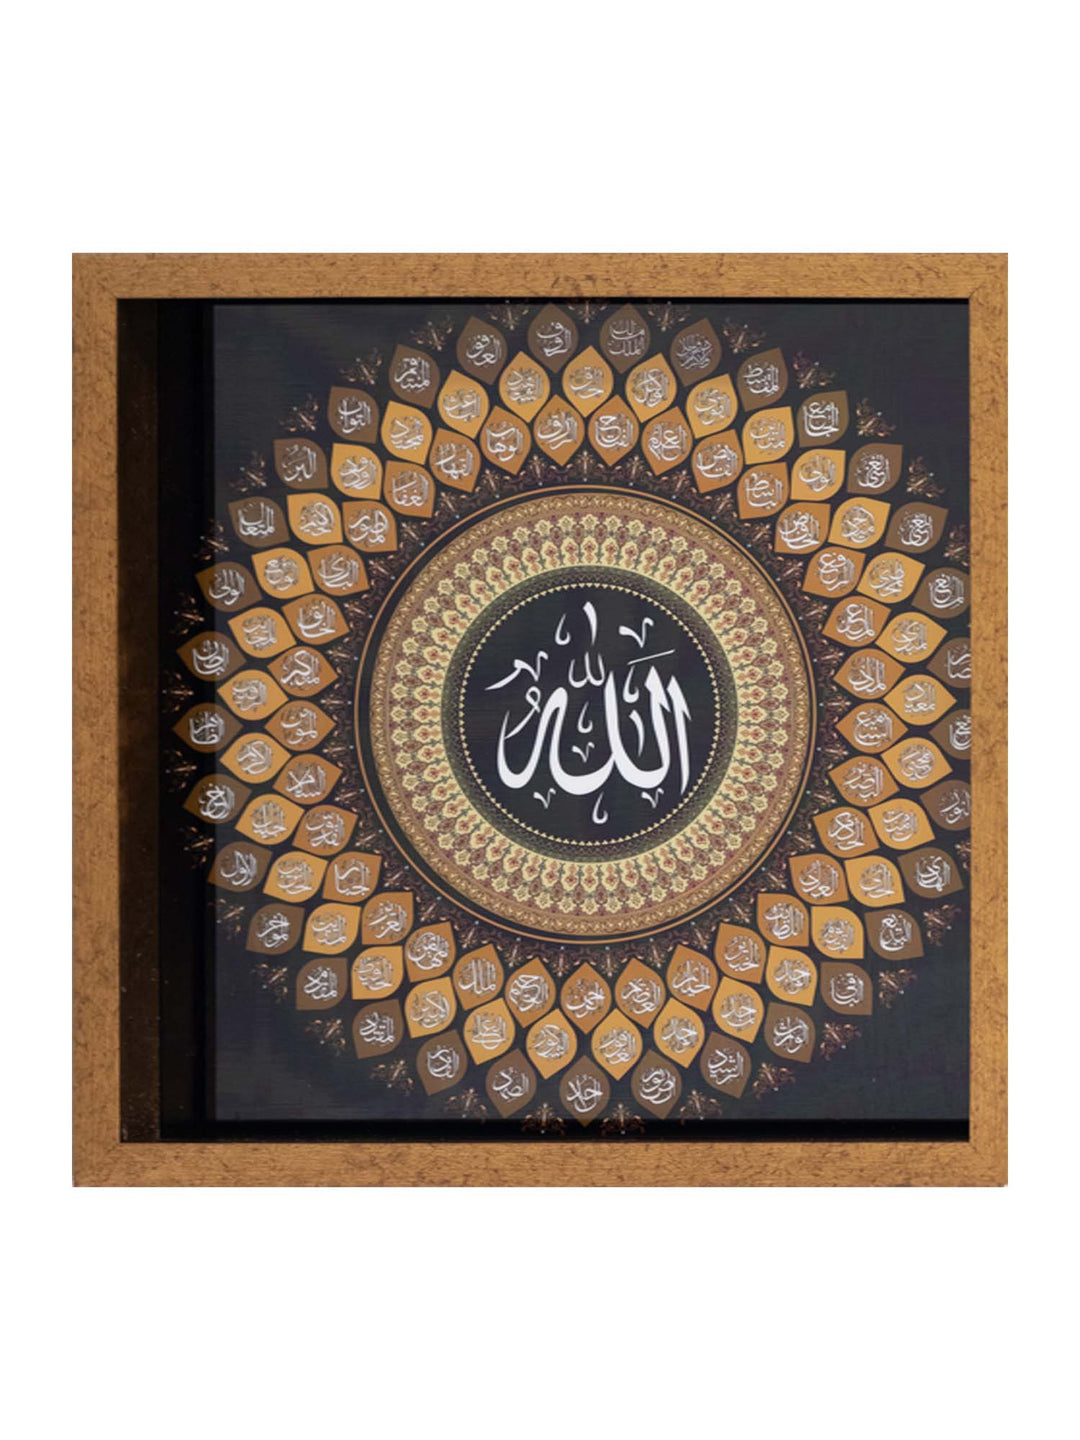 99 Names of Allah Frame - Brown Circular Design